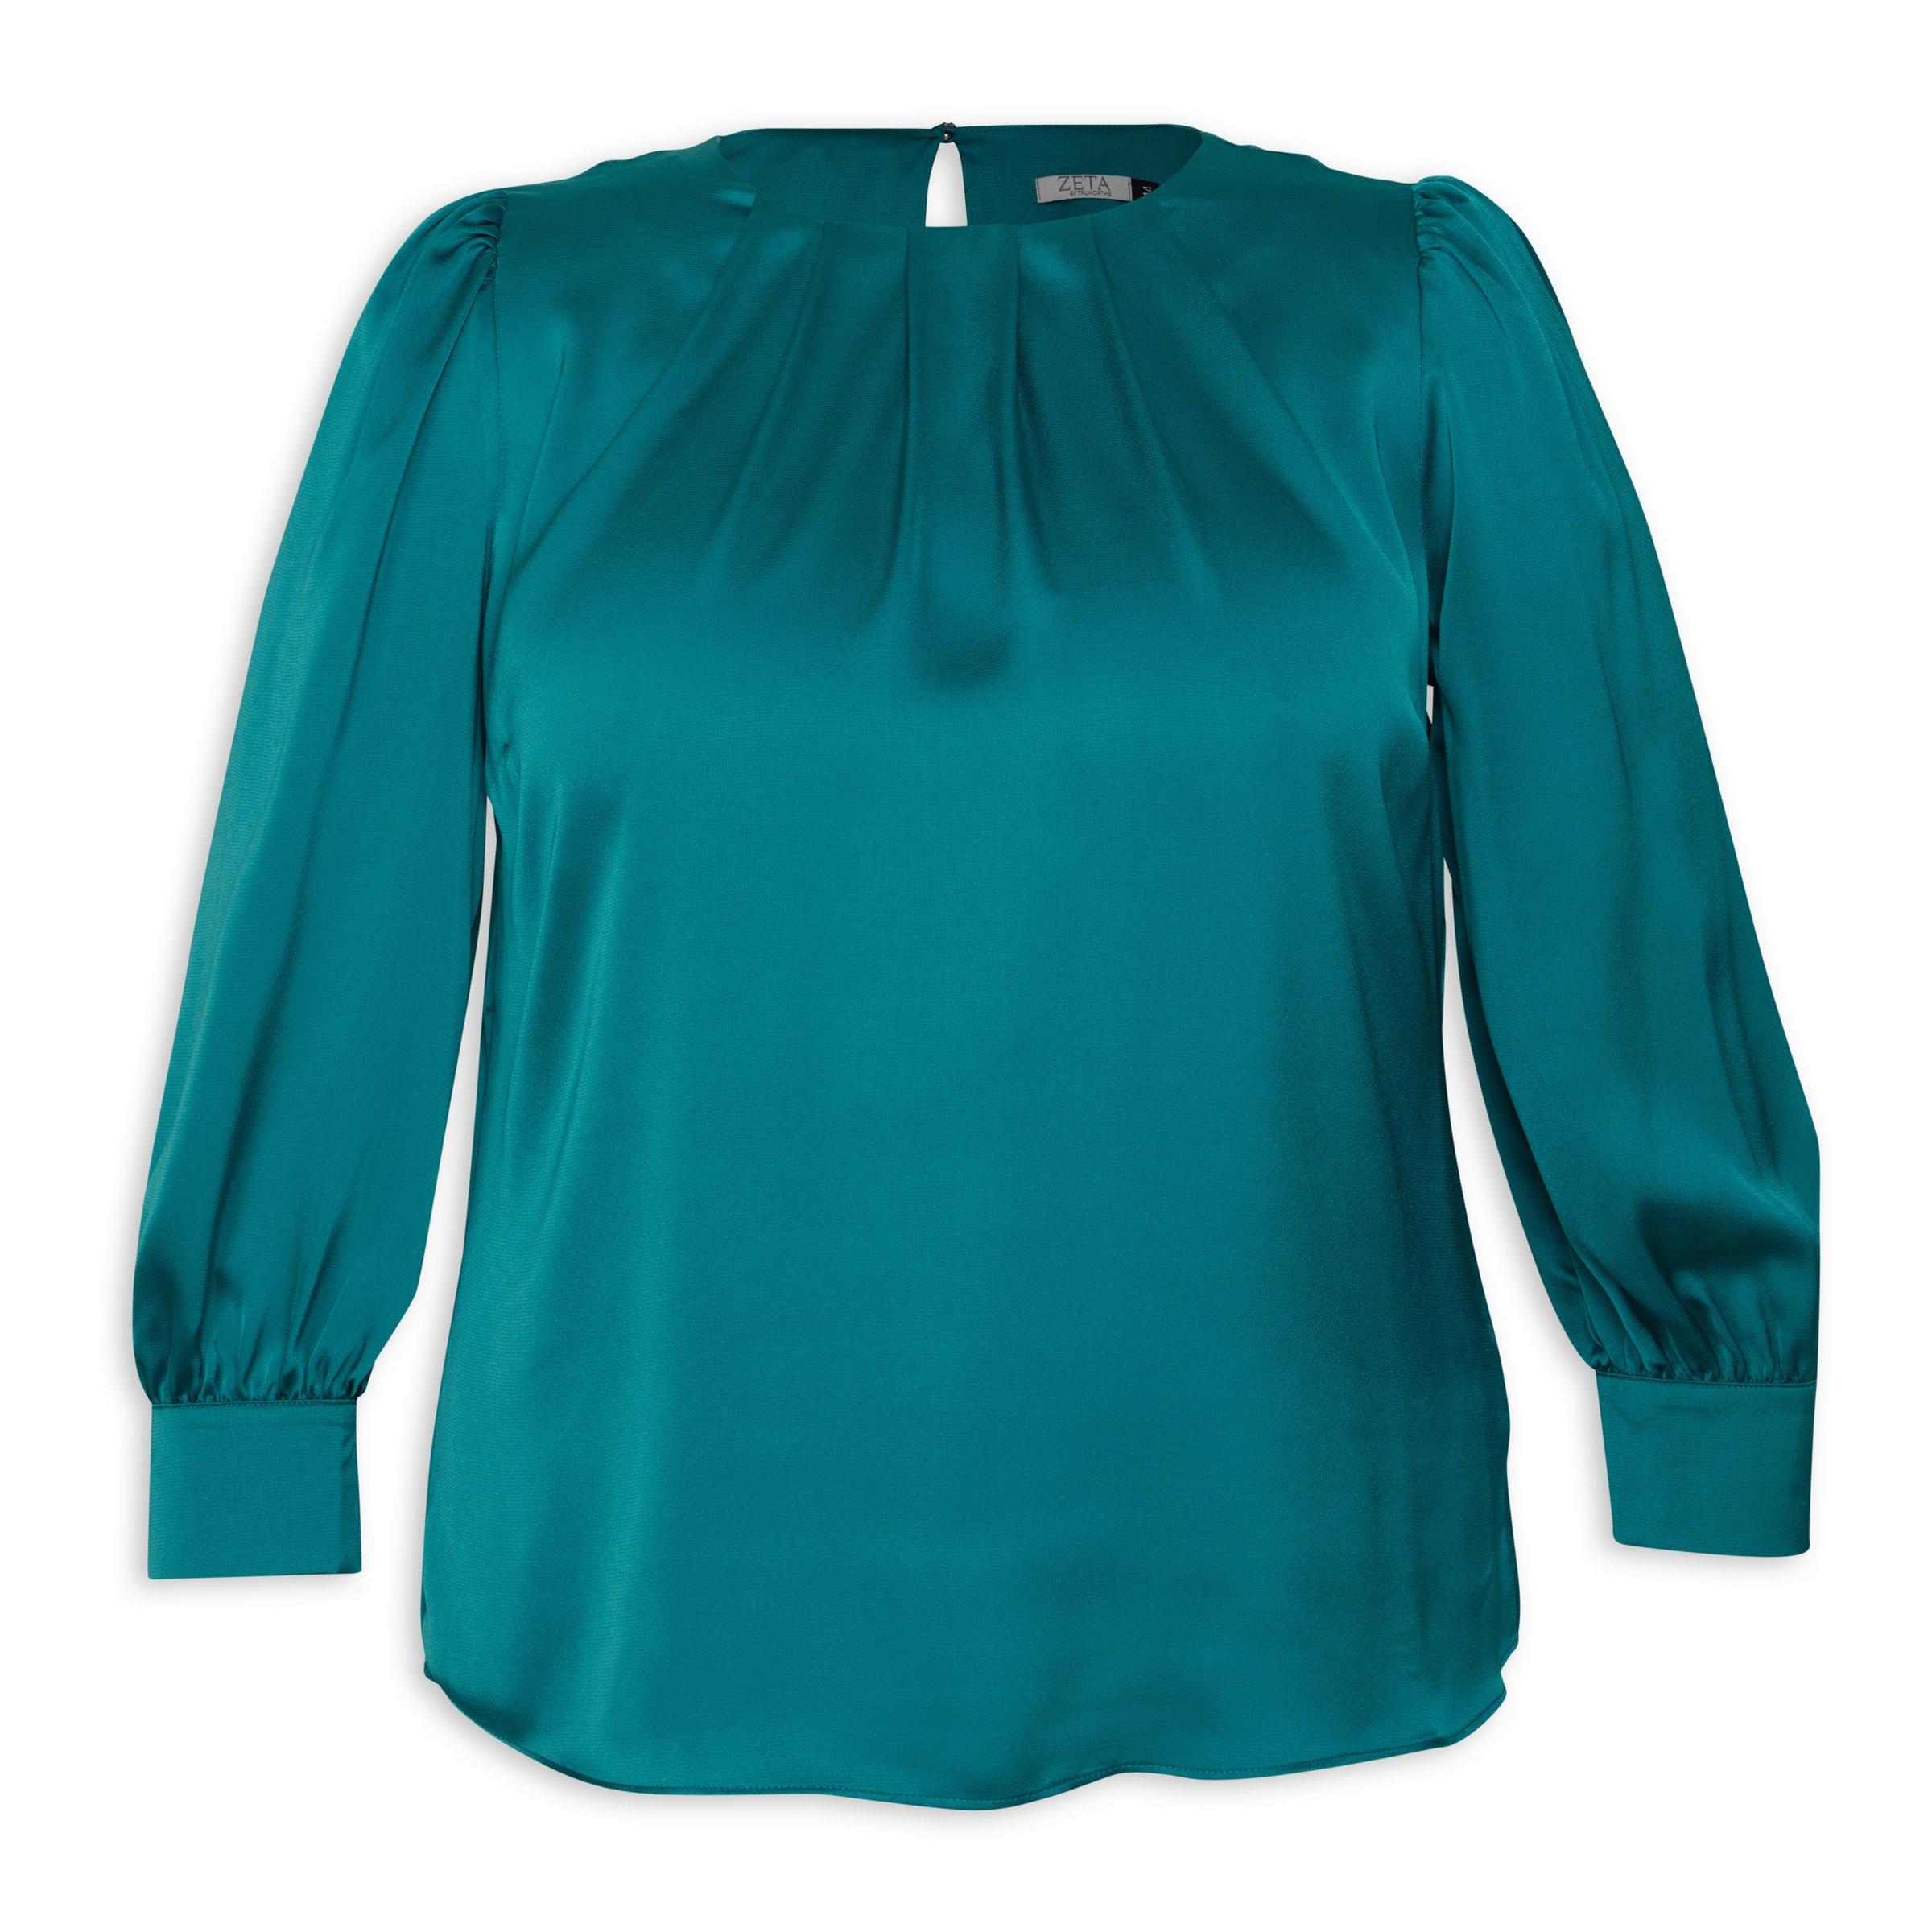 Buy Macrowoman Sleep Top - Turquoise at Rs.257 online